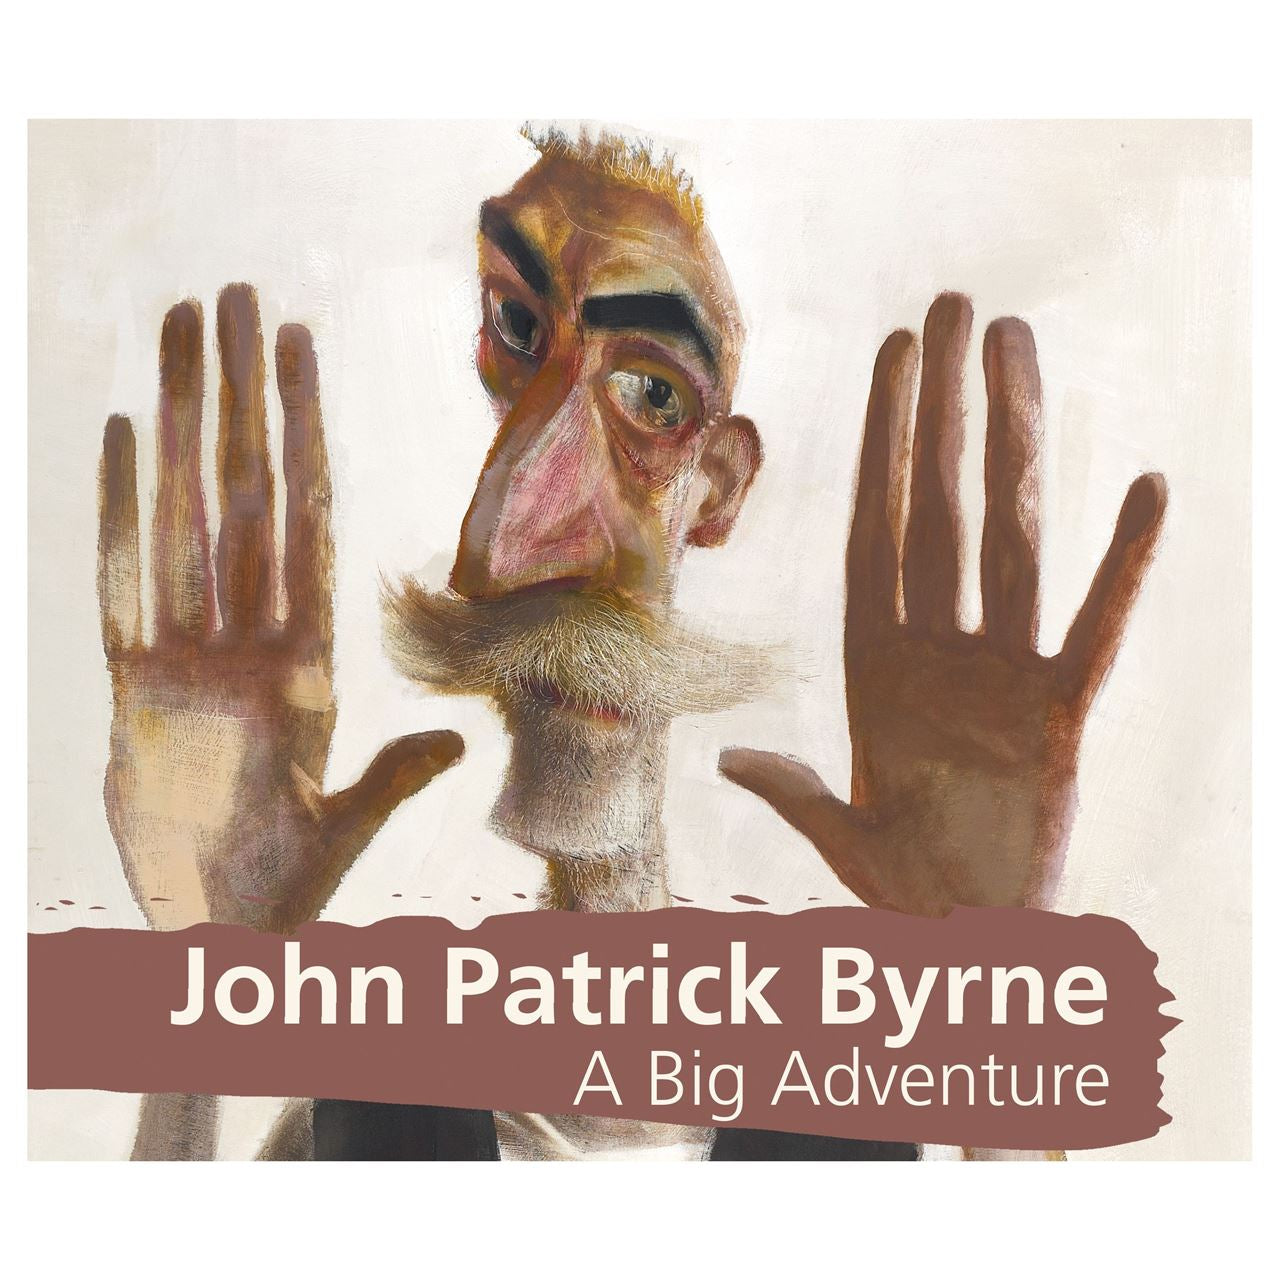 John Patrick Byrne: A Big Adventure Exhibition Book